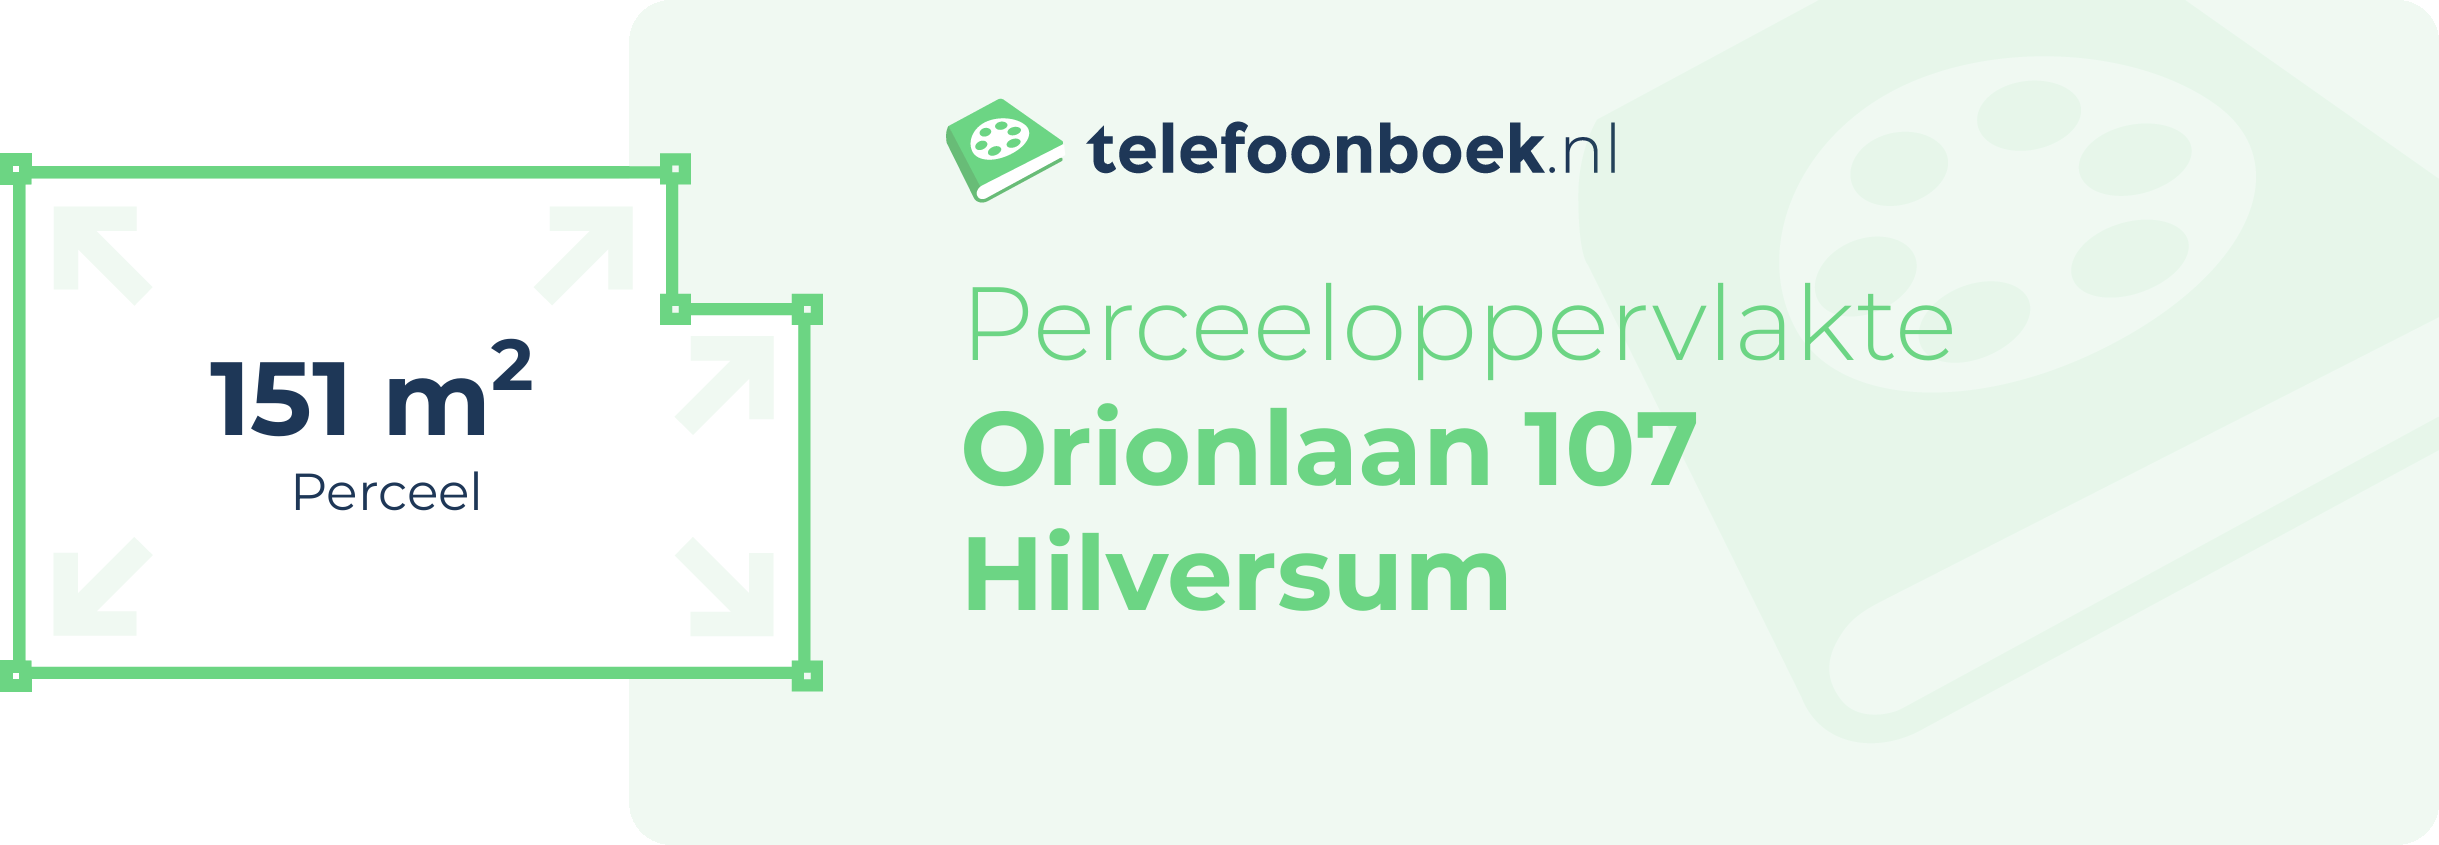 Perceeloppervlakte Orionlaan 107 Hilversum